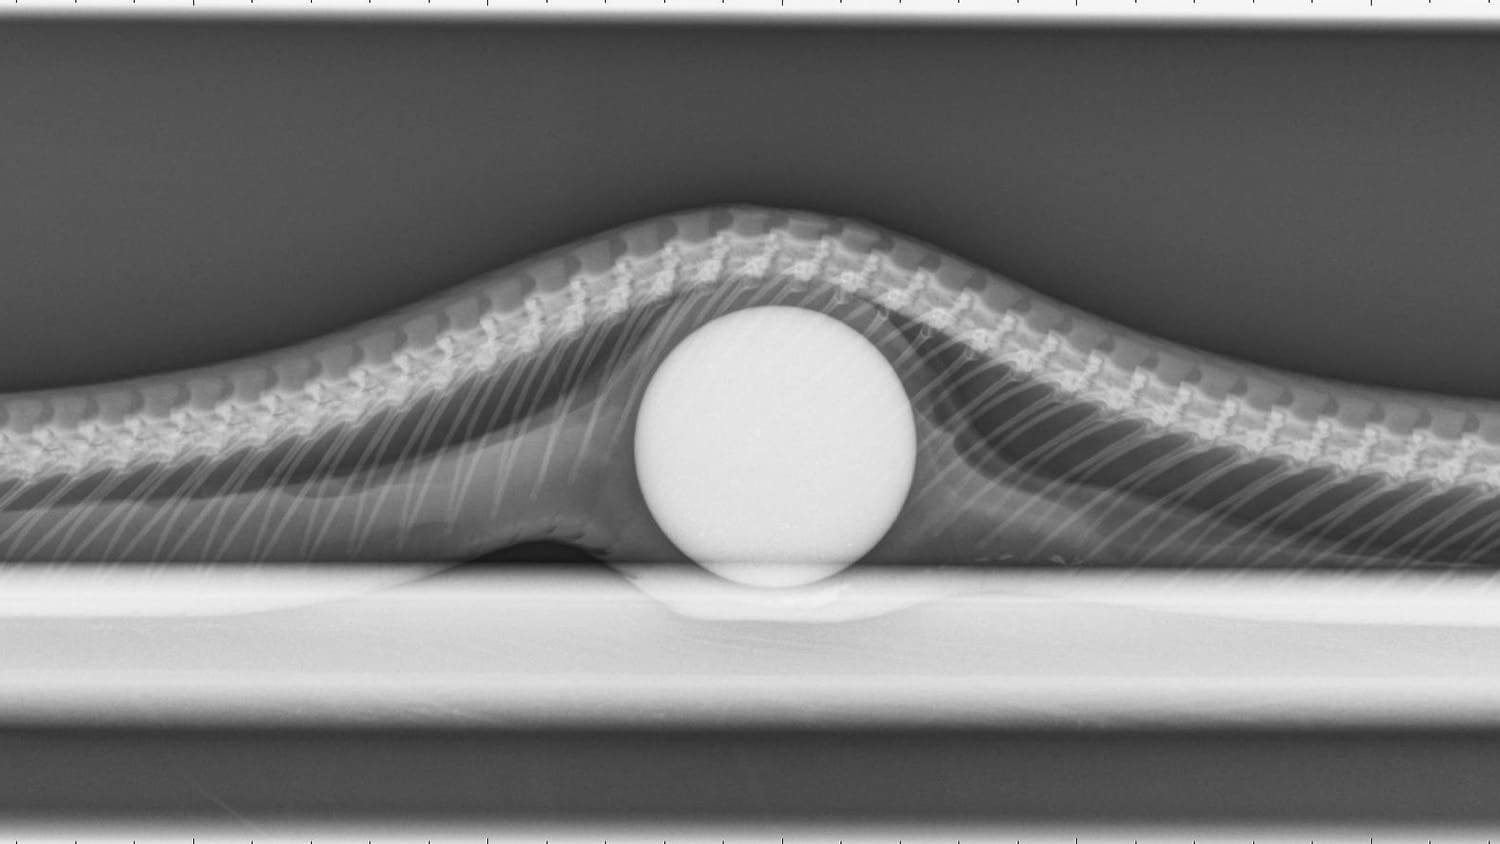 X-ray of golf ball inside a snake